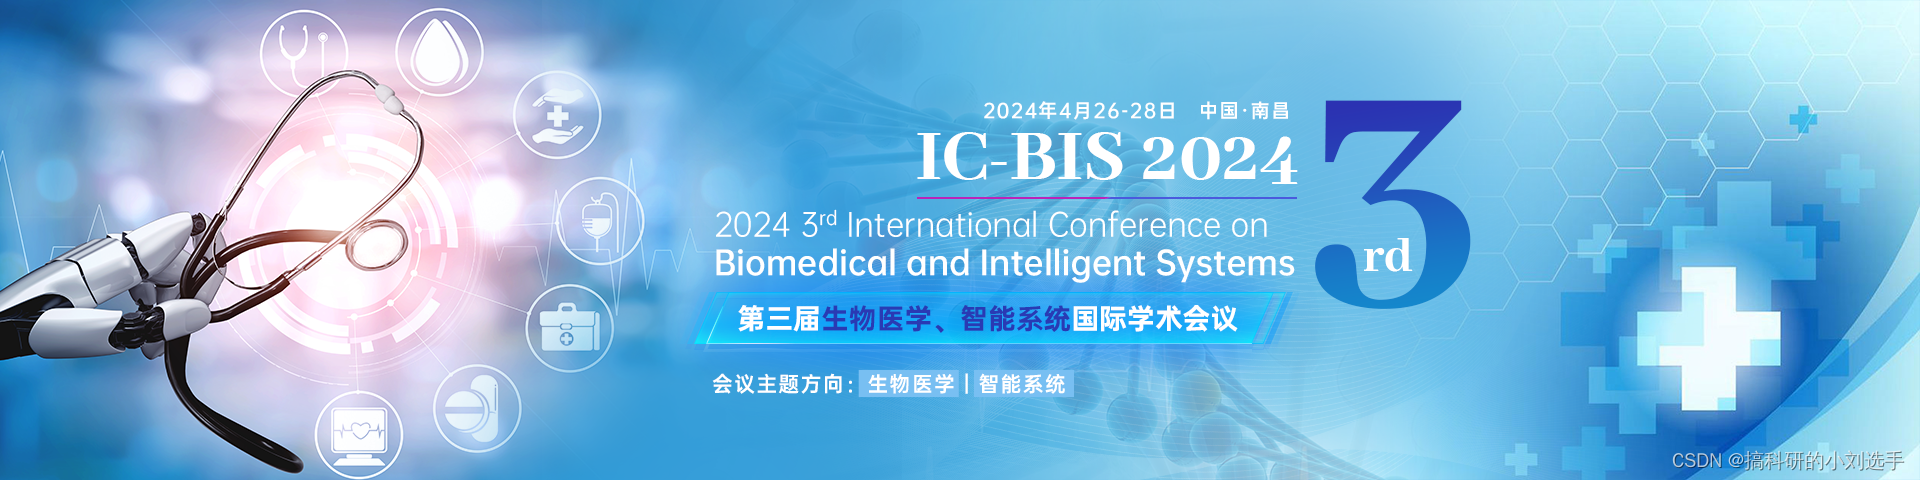 【EI会议征稿通知】2024年第三届生物医学与智能系统国际学术会议（IC-BIS 2024）